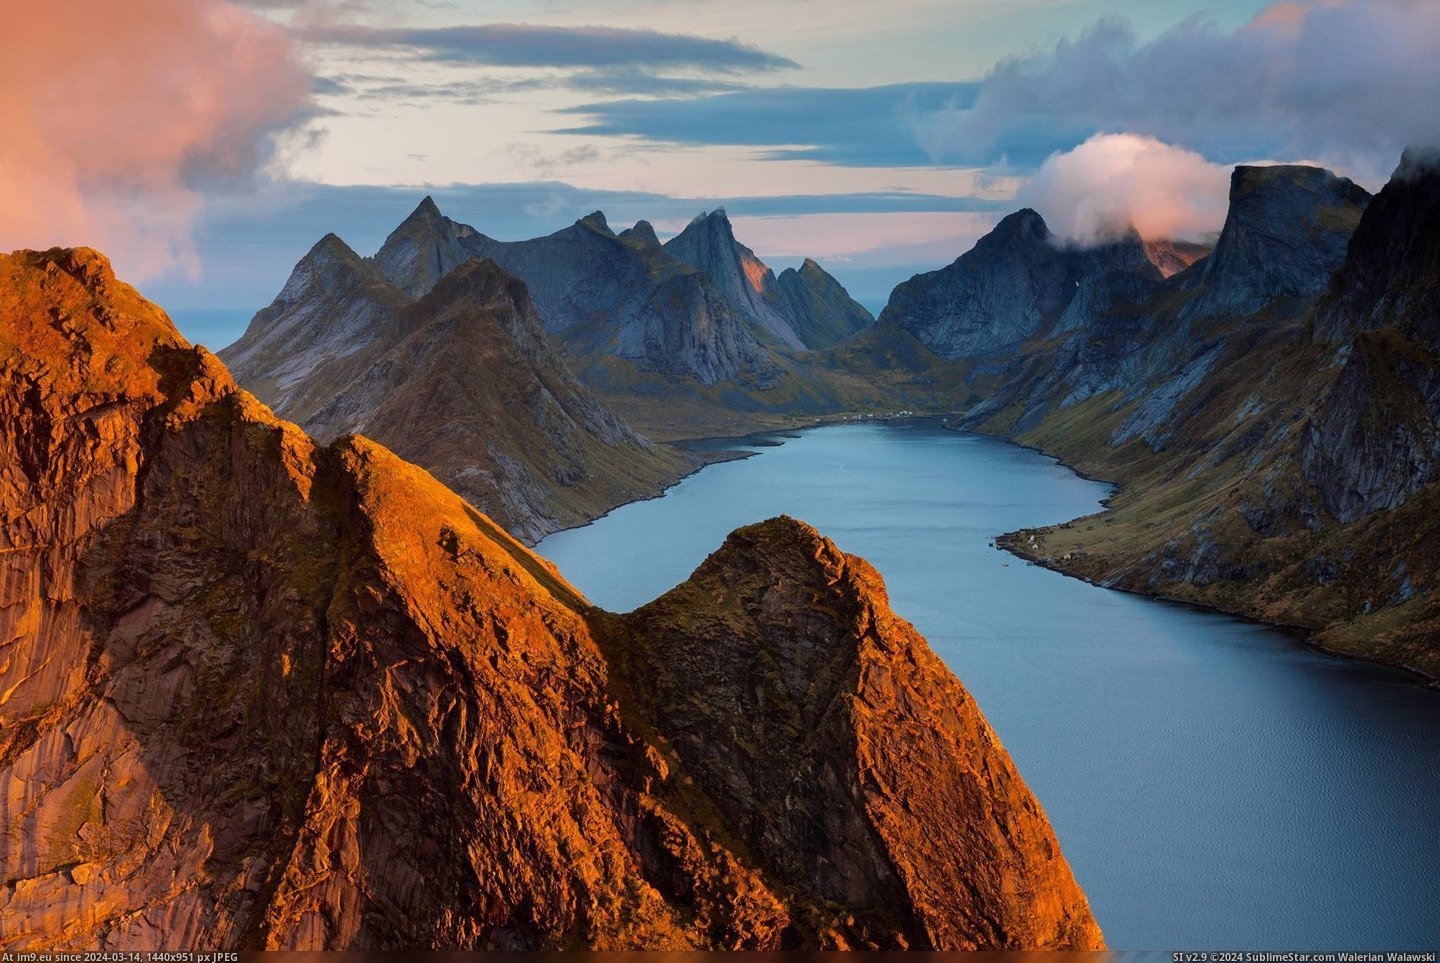 #Photo #World #Islands #2048x1365 #Lofoten #Top #Norway [Earthporn] 'Top of the World' - Lofoten Islands, Norway [2048x1365] Photo by Orsolya Haarberg Pic. (Изображение из альбом My r/EARTHPORN favs))